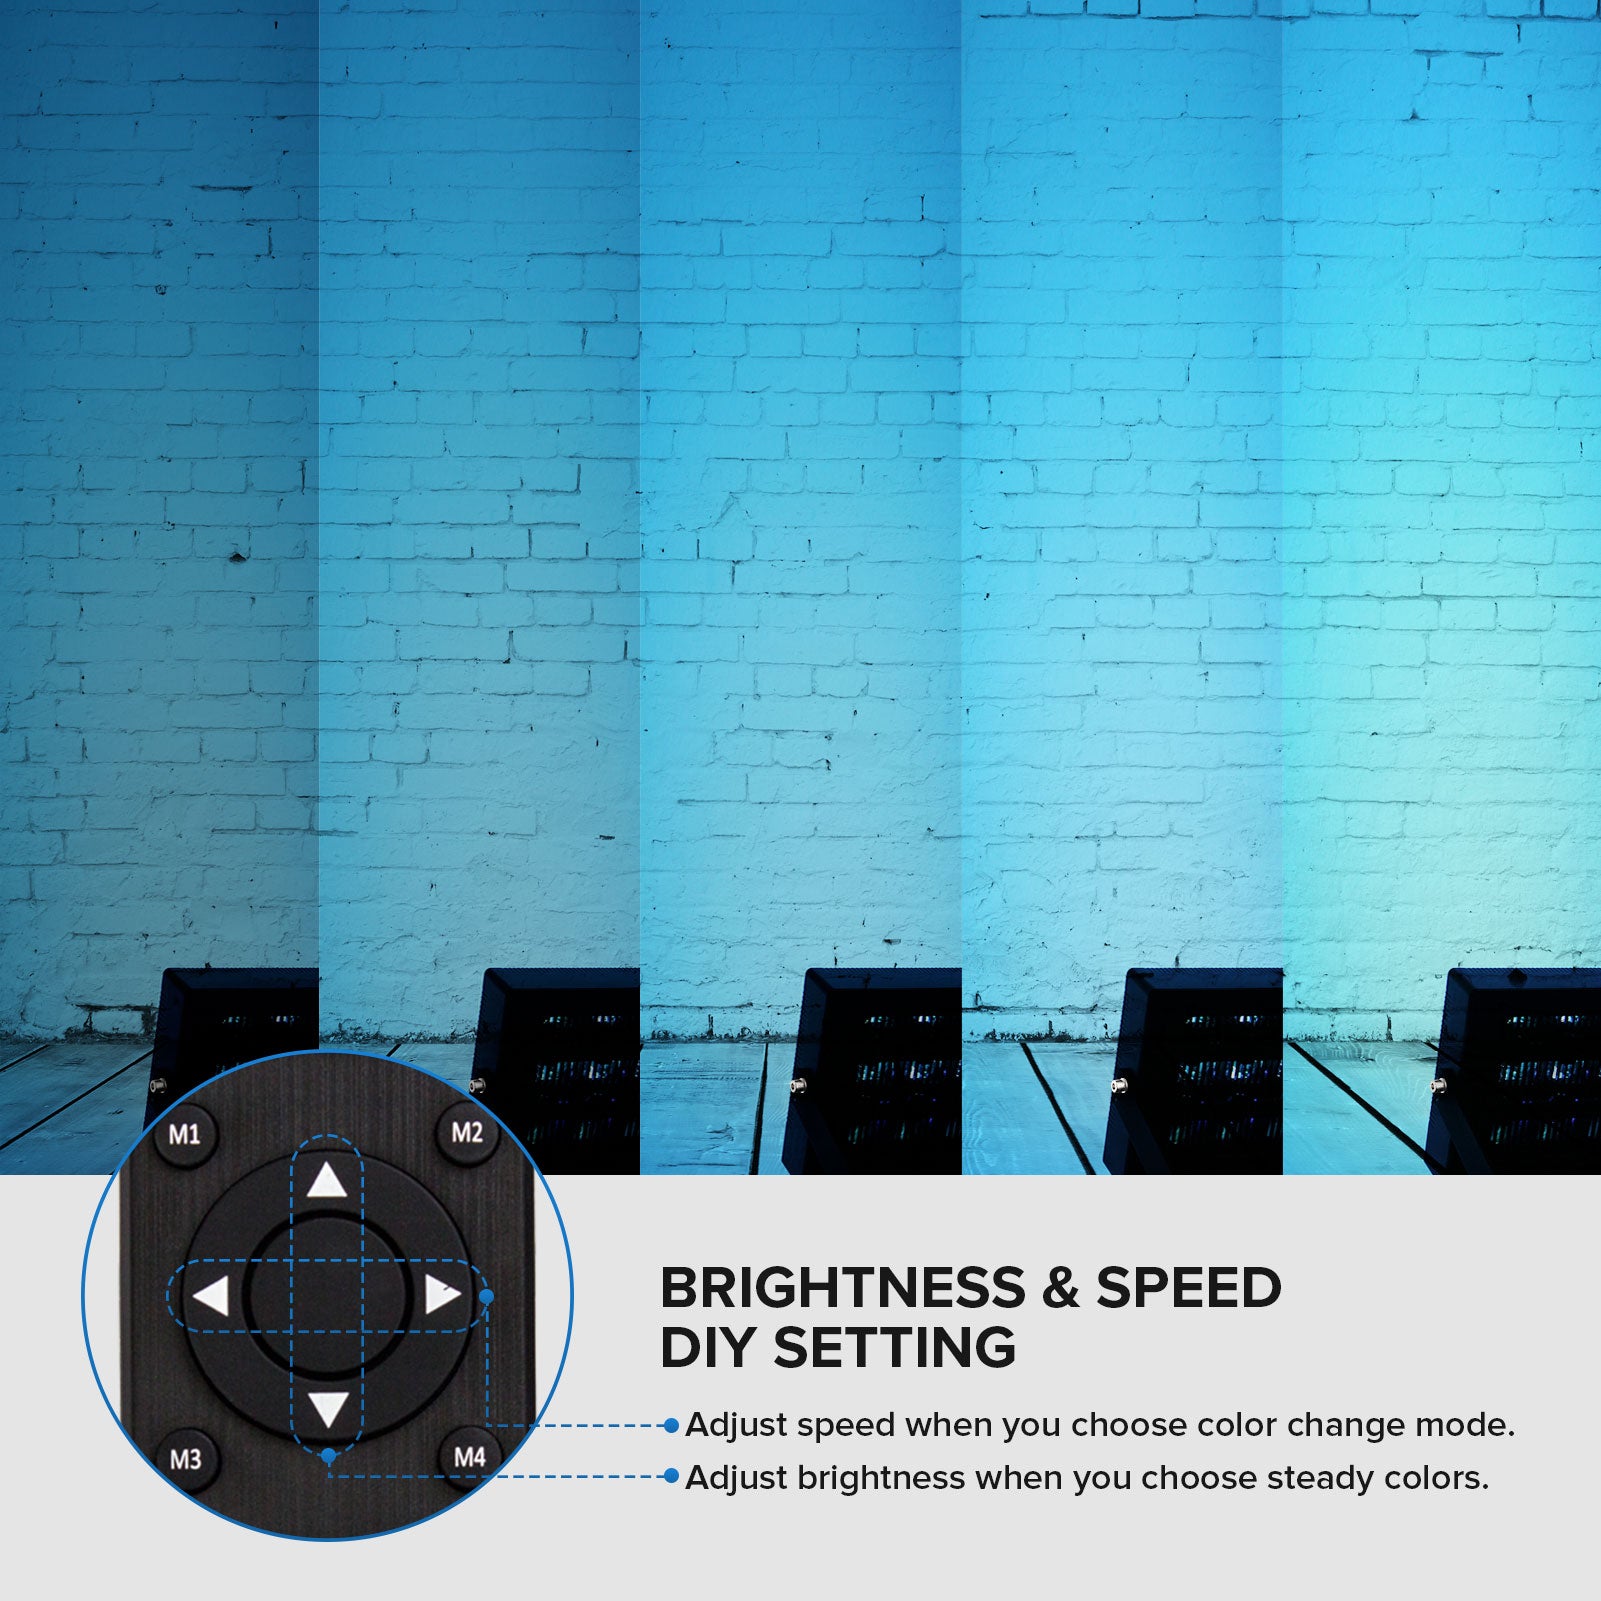 25W RGB LED Flood Light (EU ONLY) has brightness & speed DIY setting.